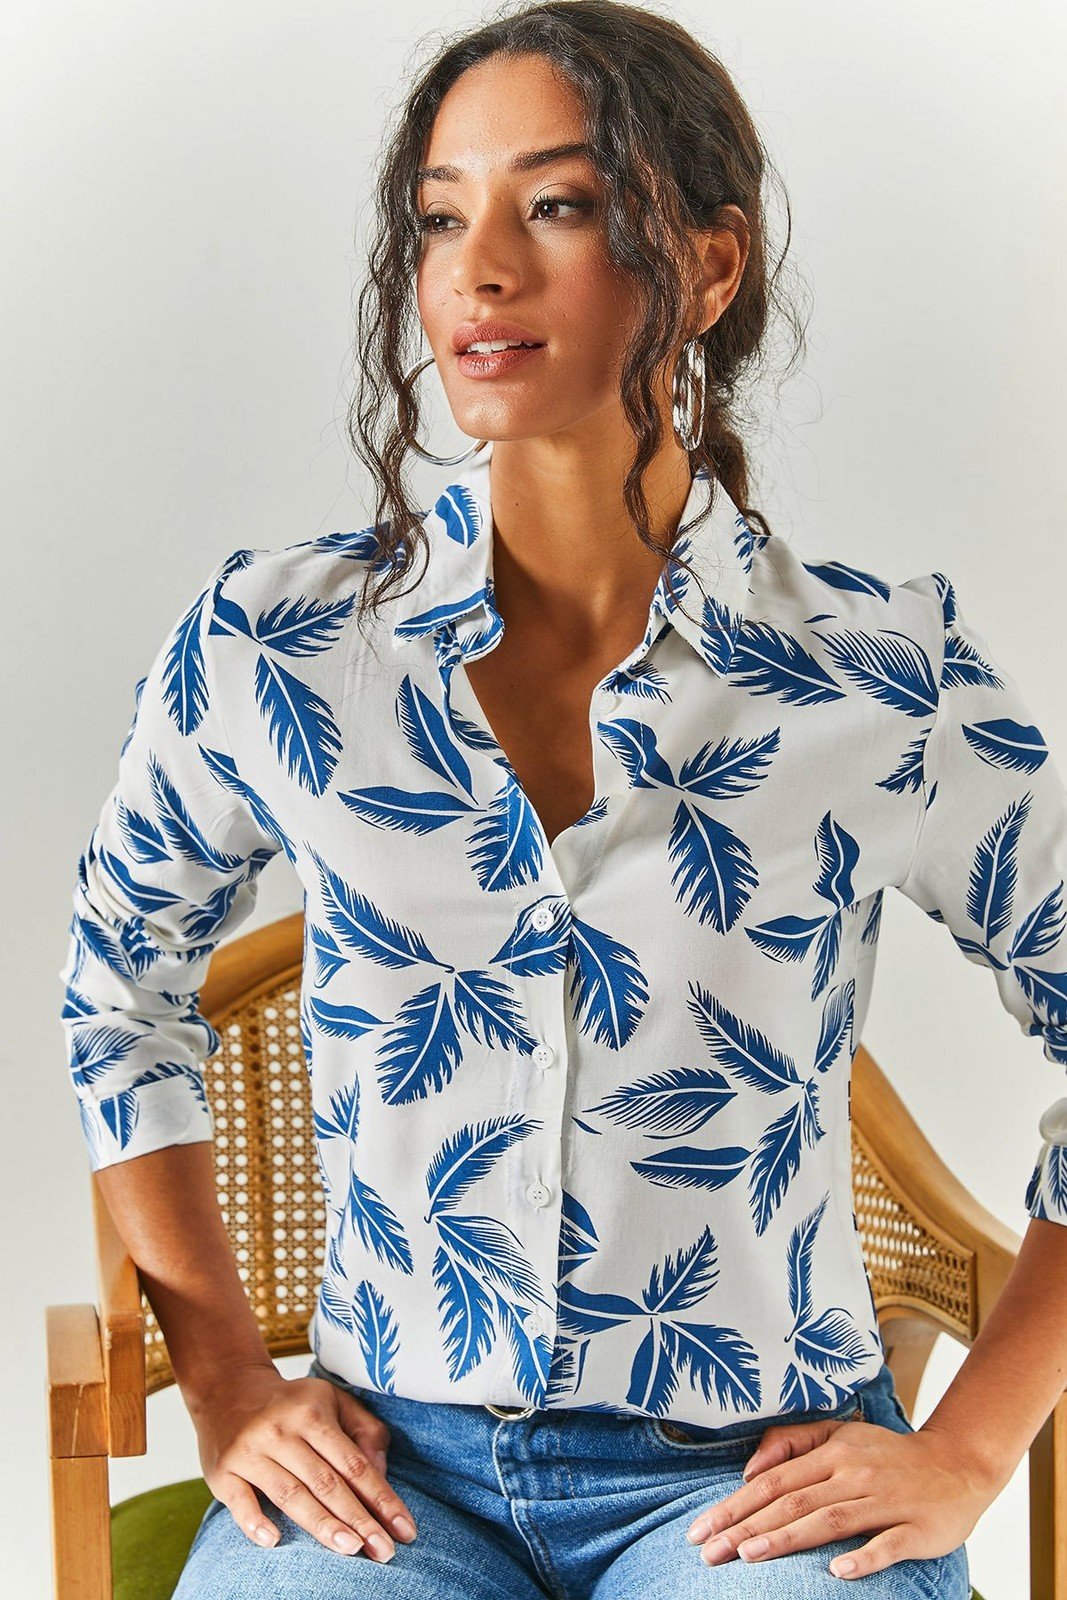 Olalook Women's Navy Blue Feather Pattern Shirt